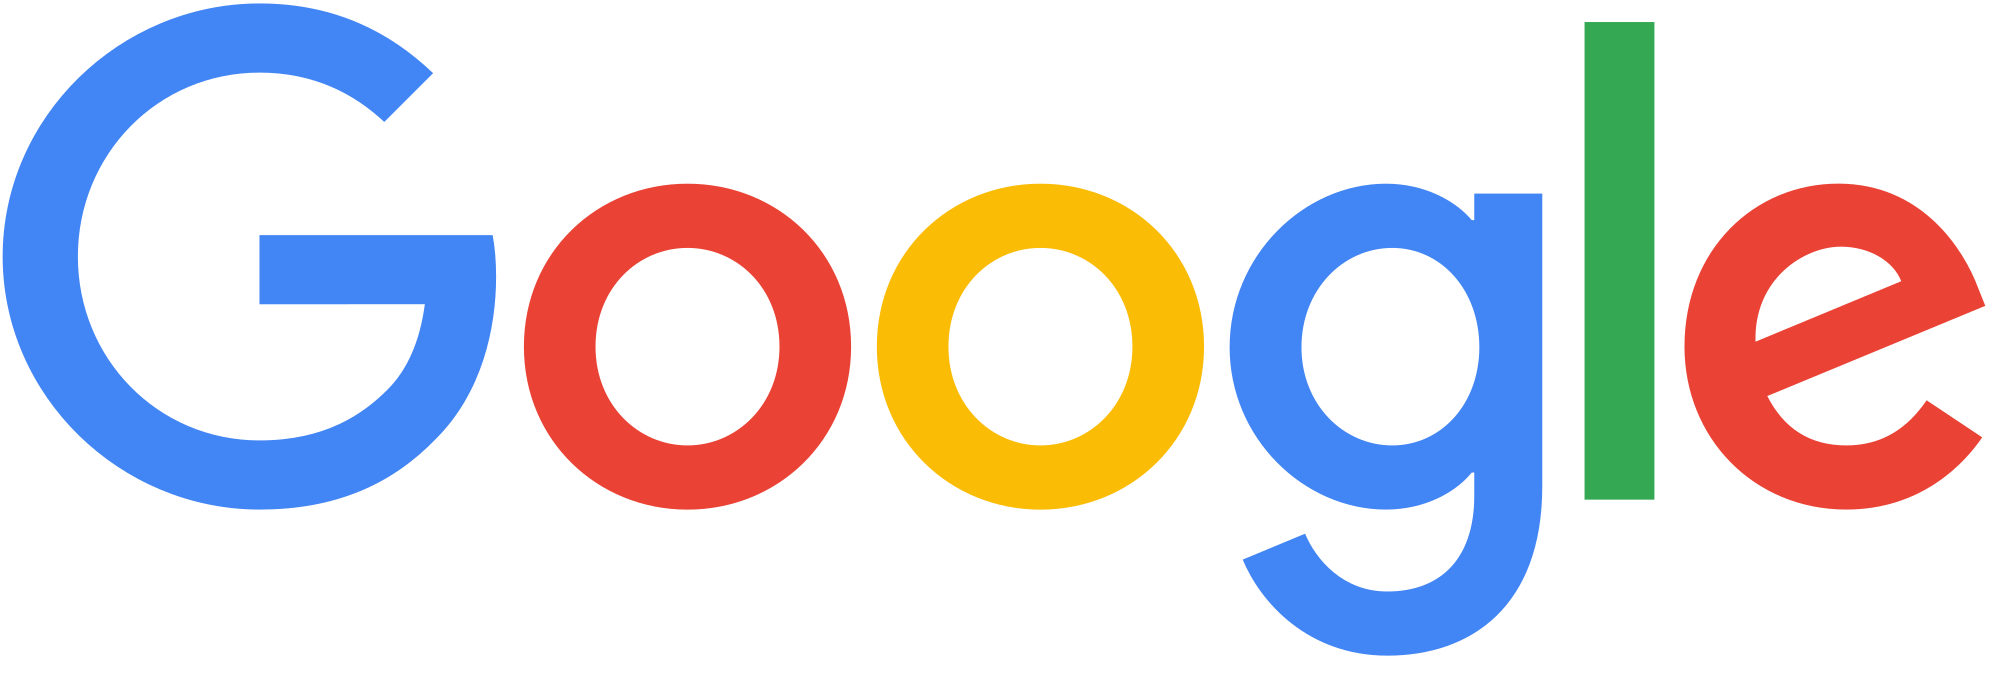 Google logo 2015 png. File svg wikimedia commons